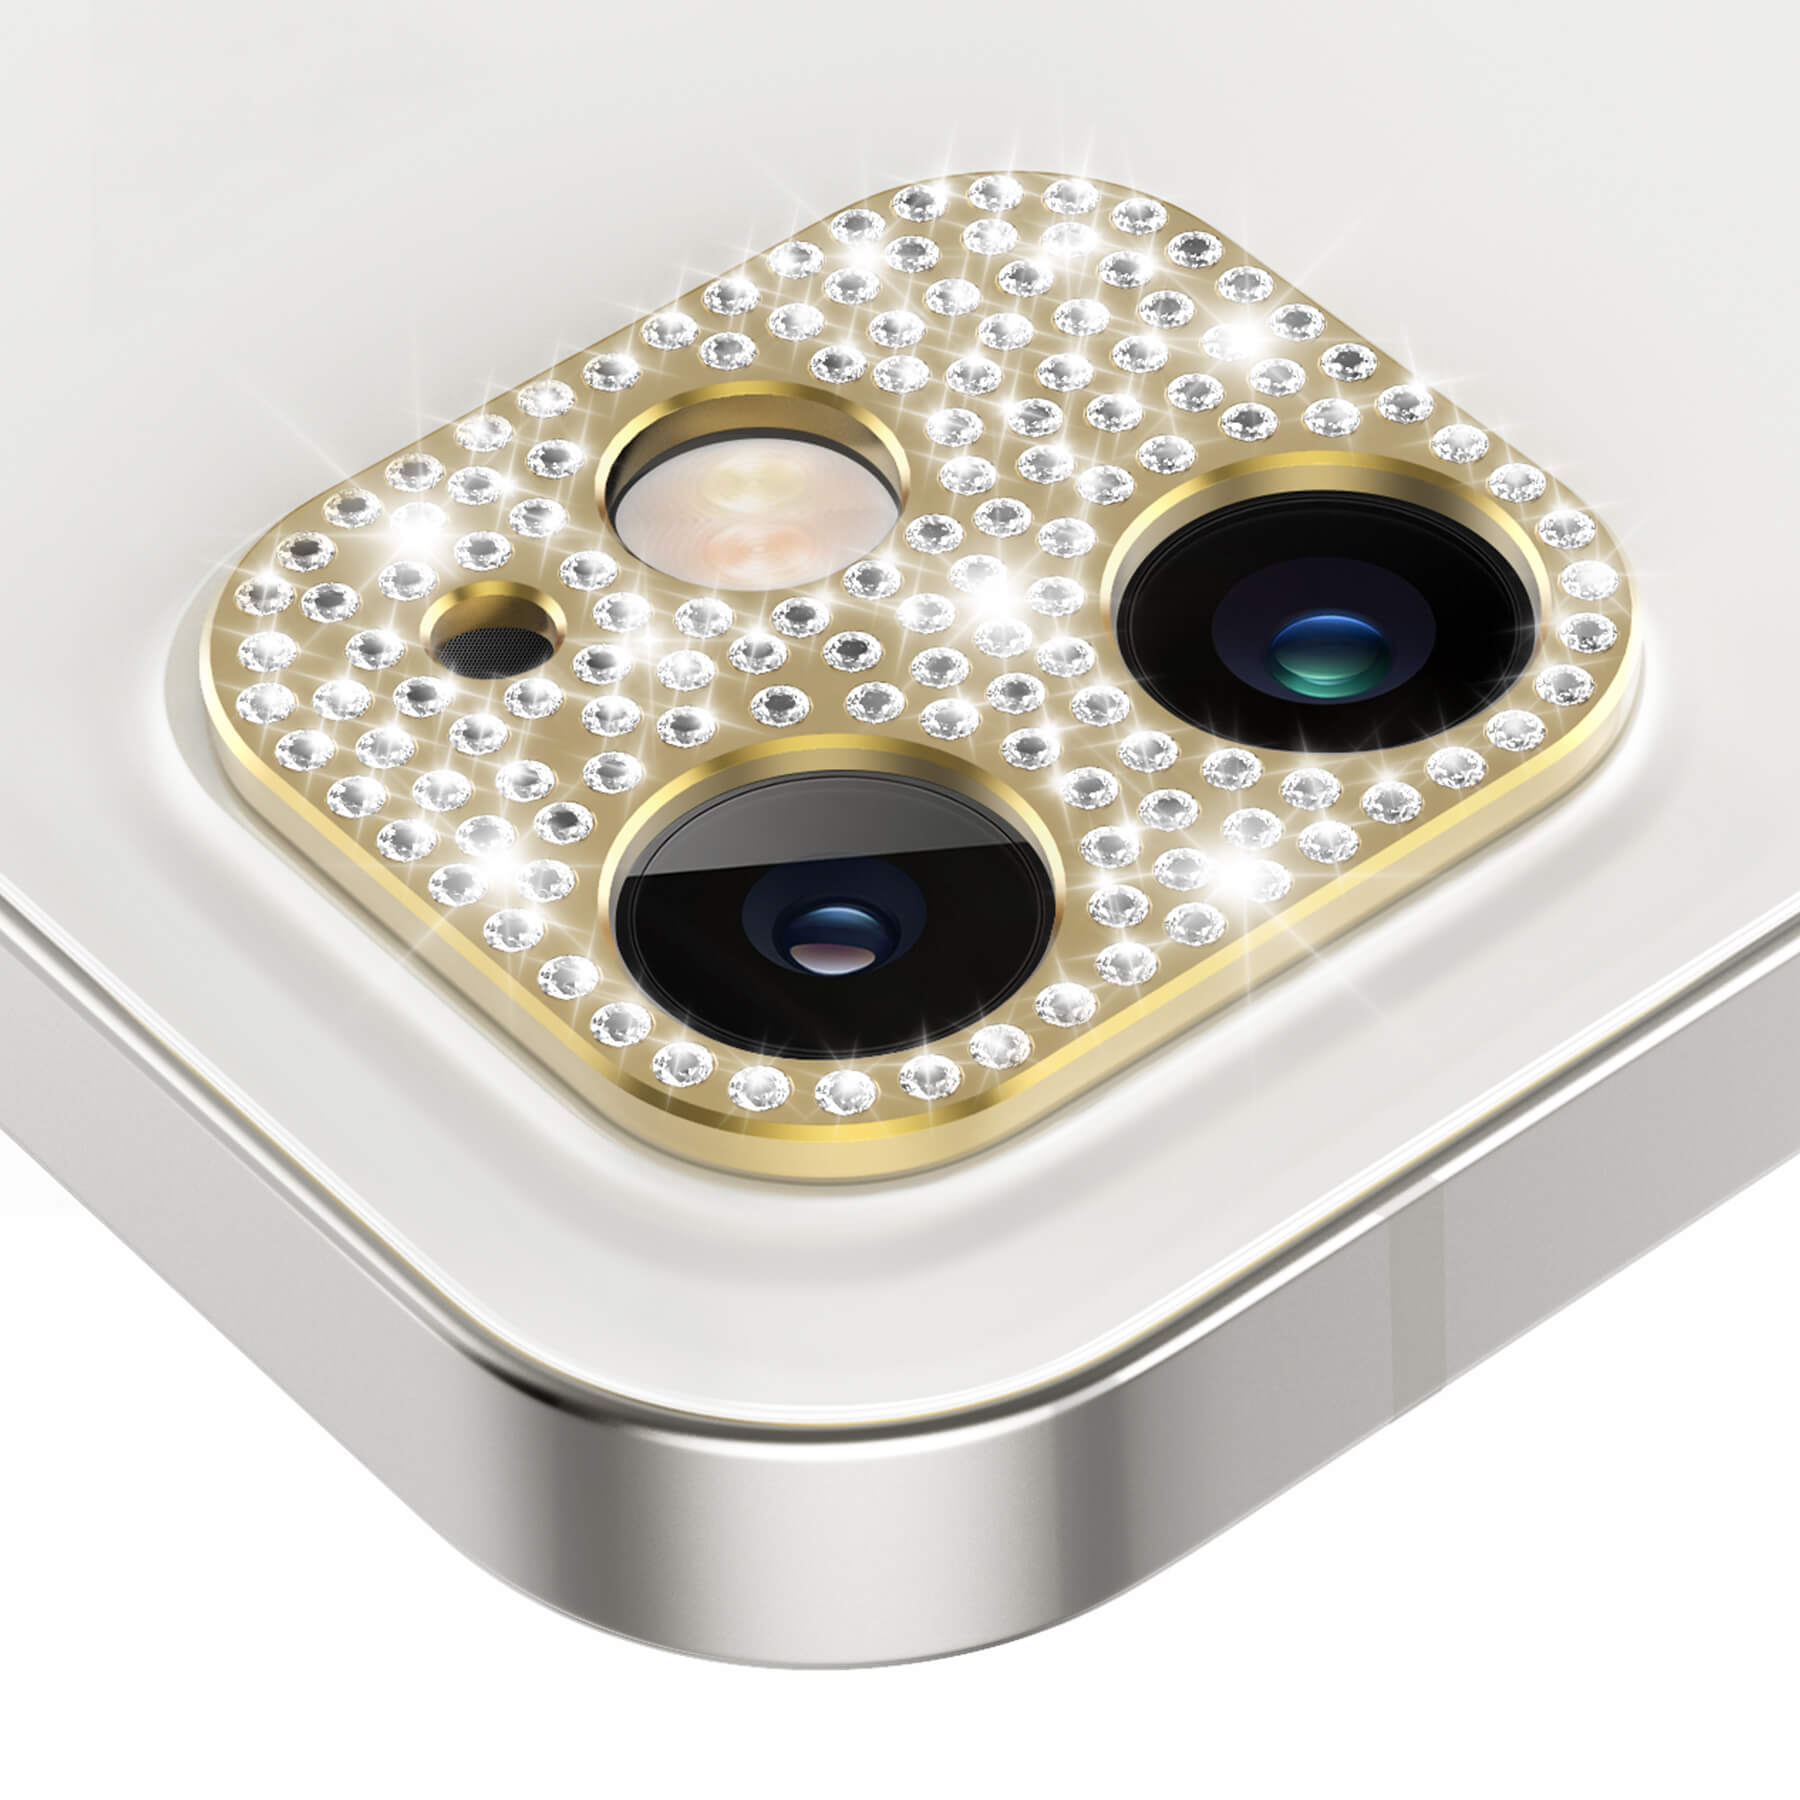 bling diamond iPhone 12 camera lens protector - gold